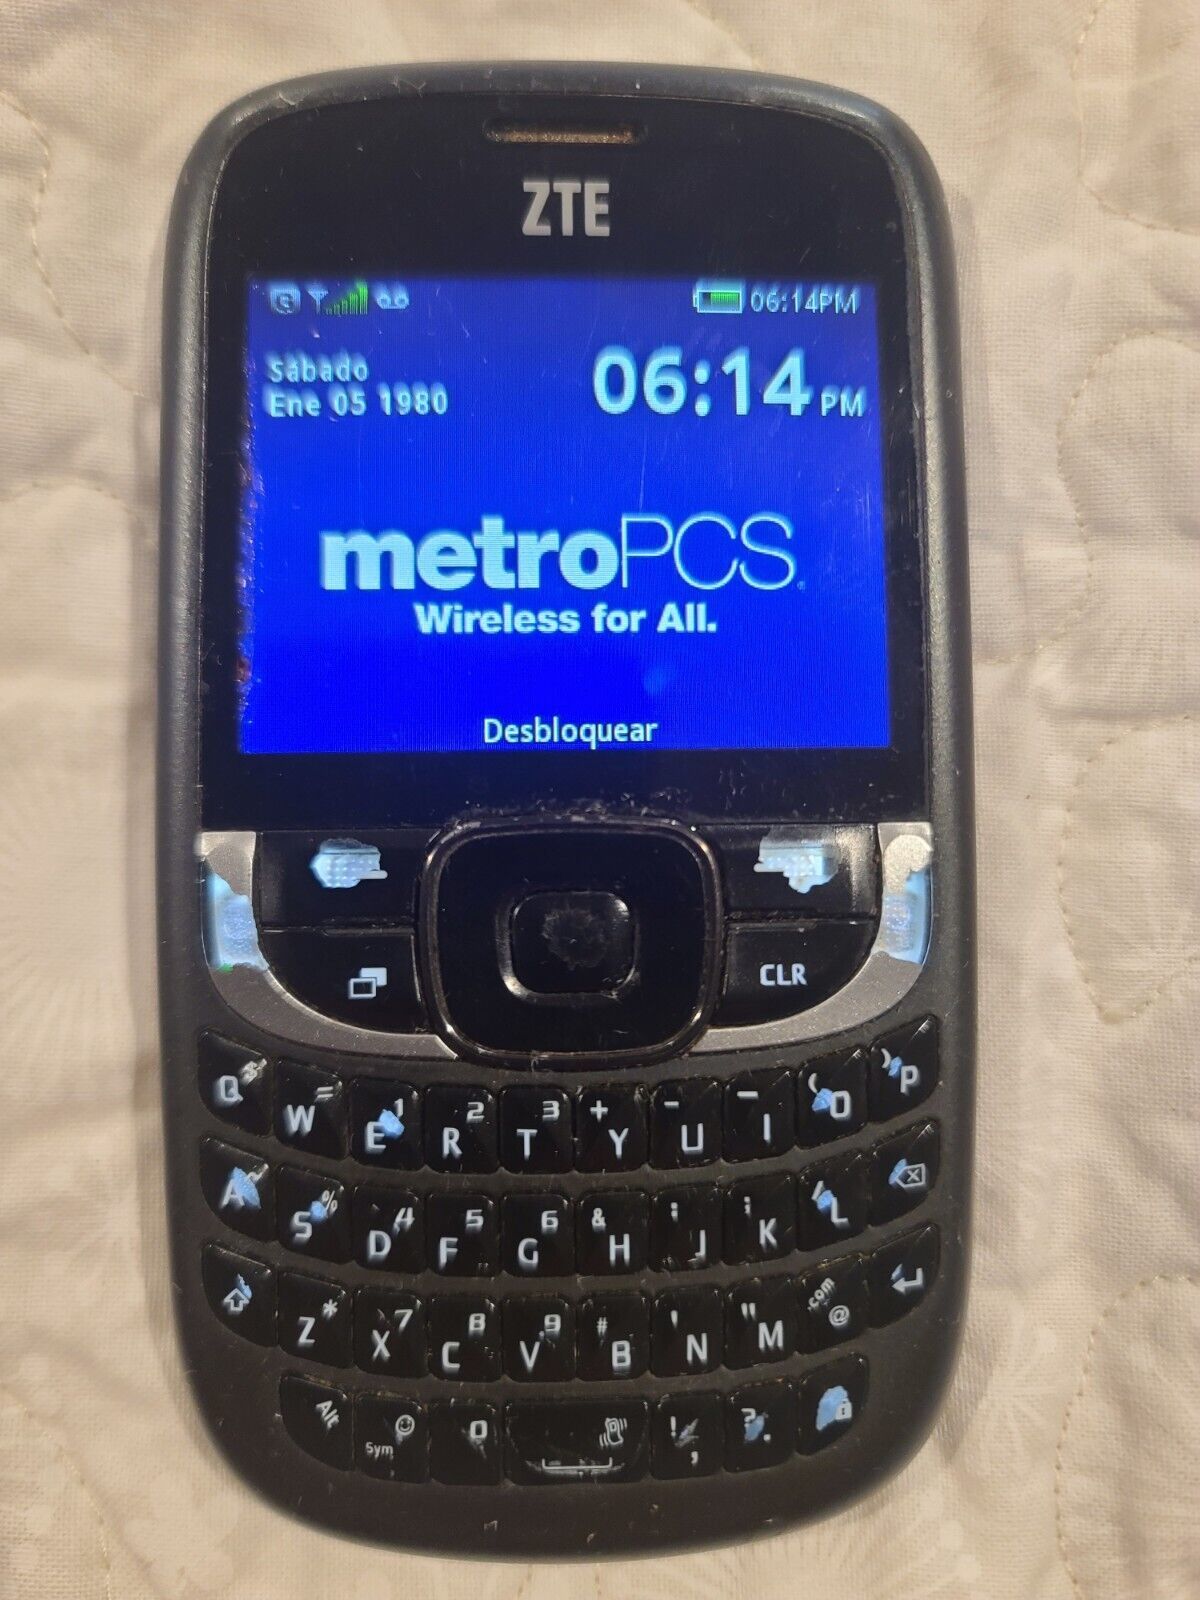 ZTE Aspect F555 - Black ( MetroPCS ) Cellular Phone - Parts or Repair - $9.79